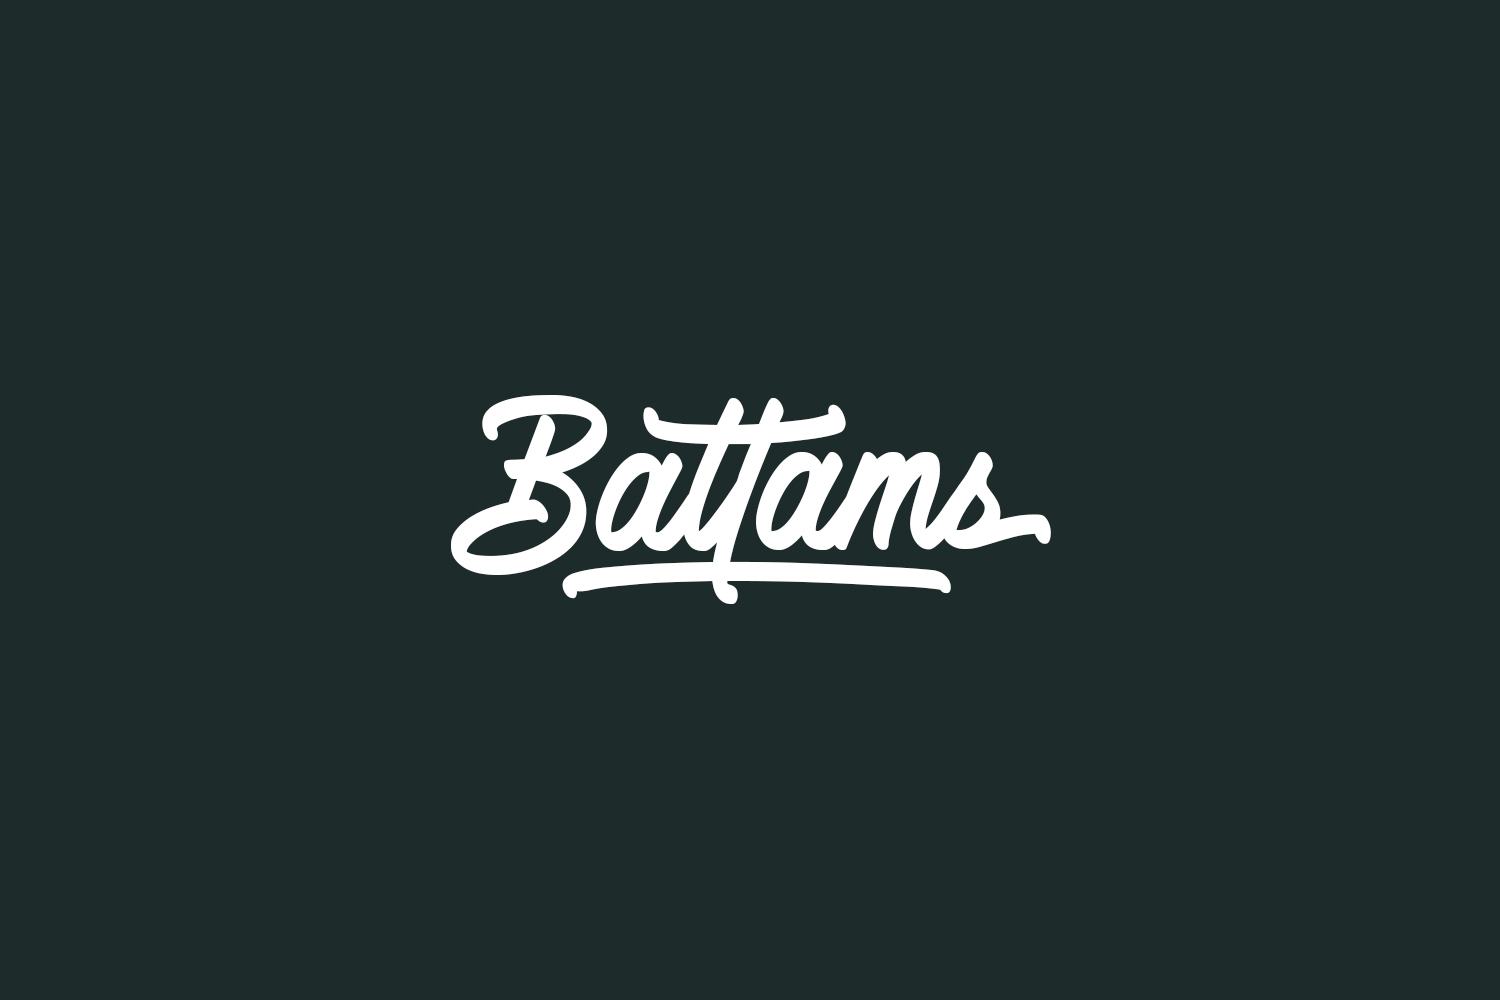 Battams Free Font